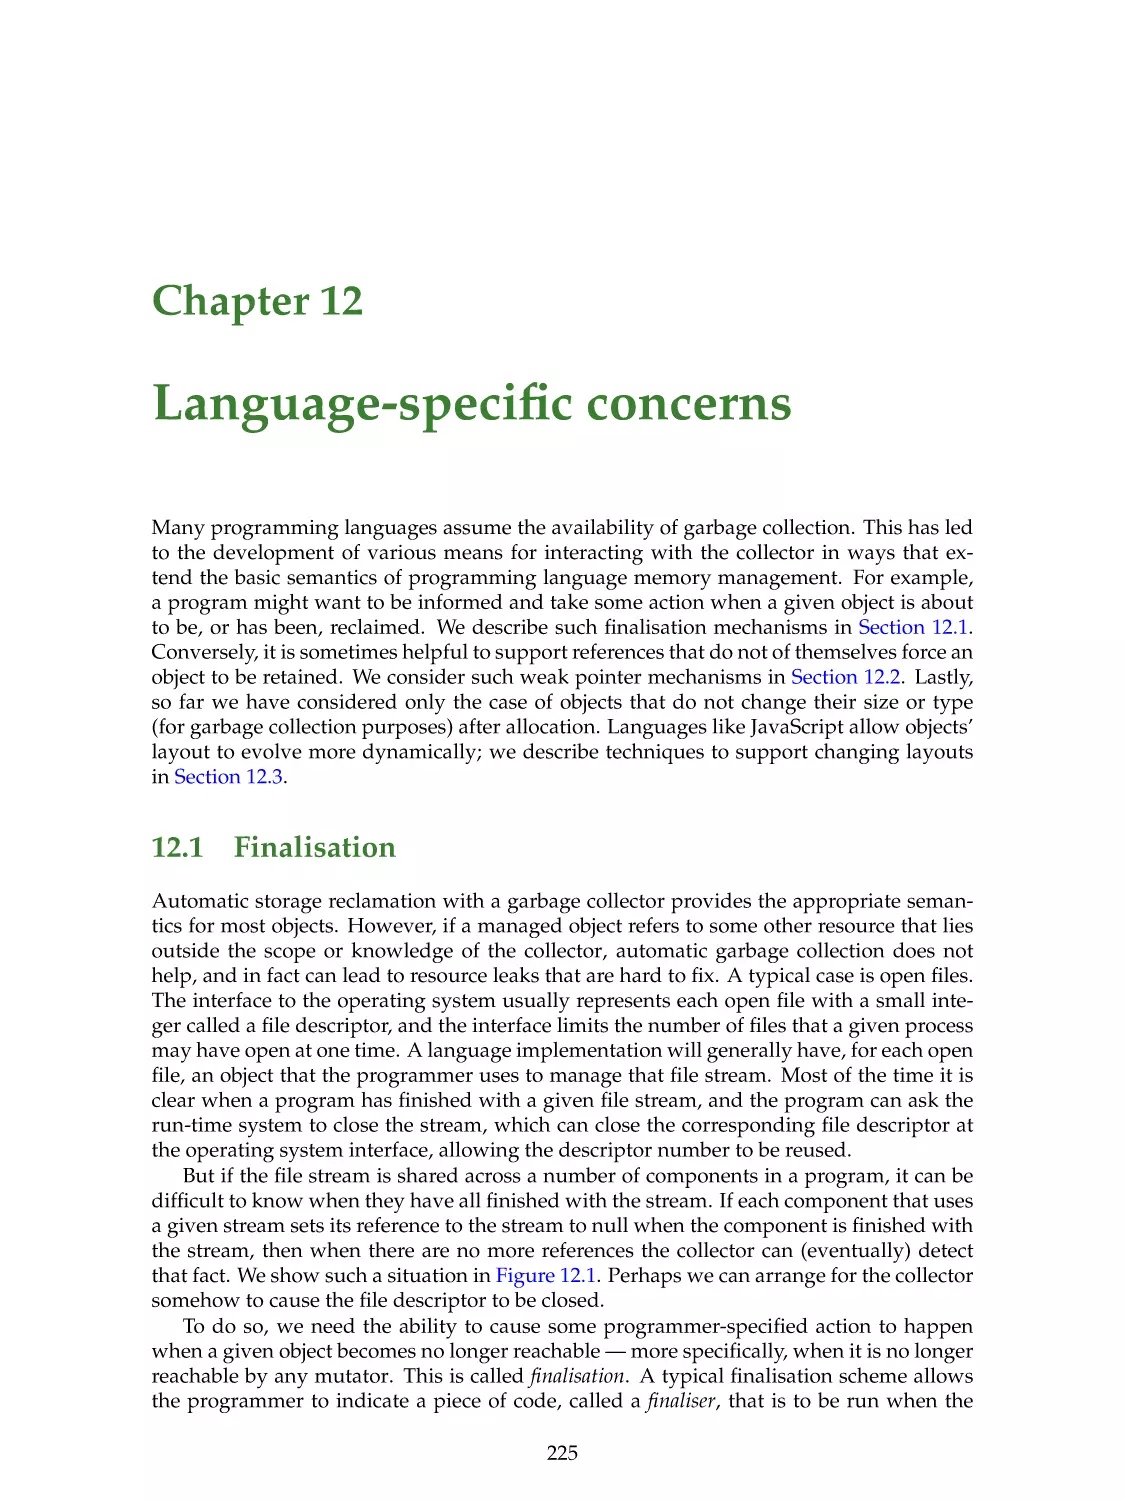 12. Language-specific concerns
12.1. Finalisation